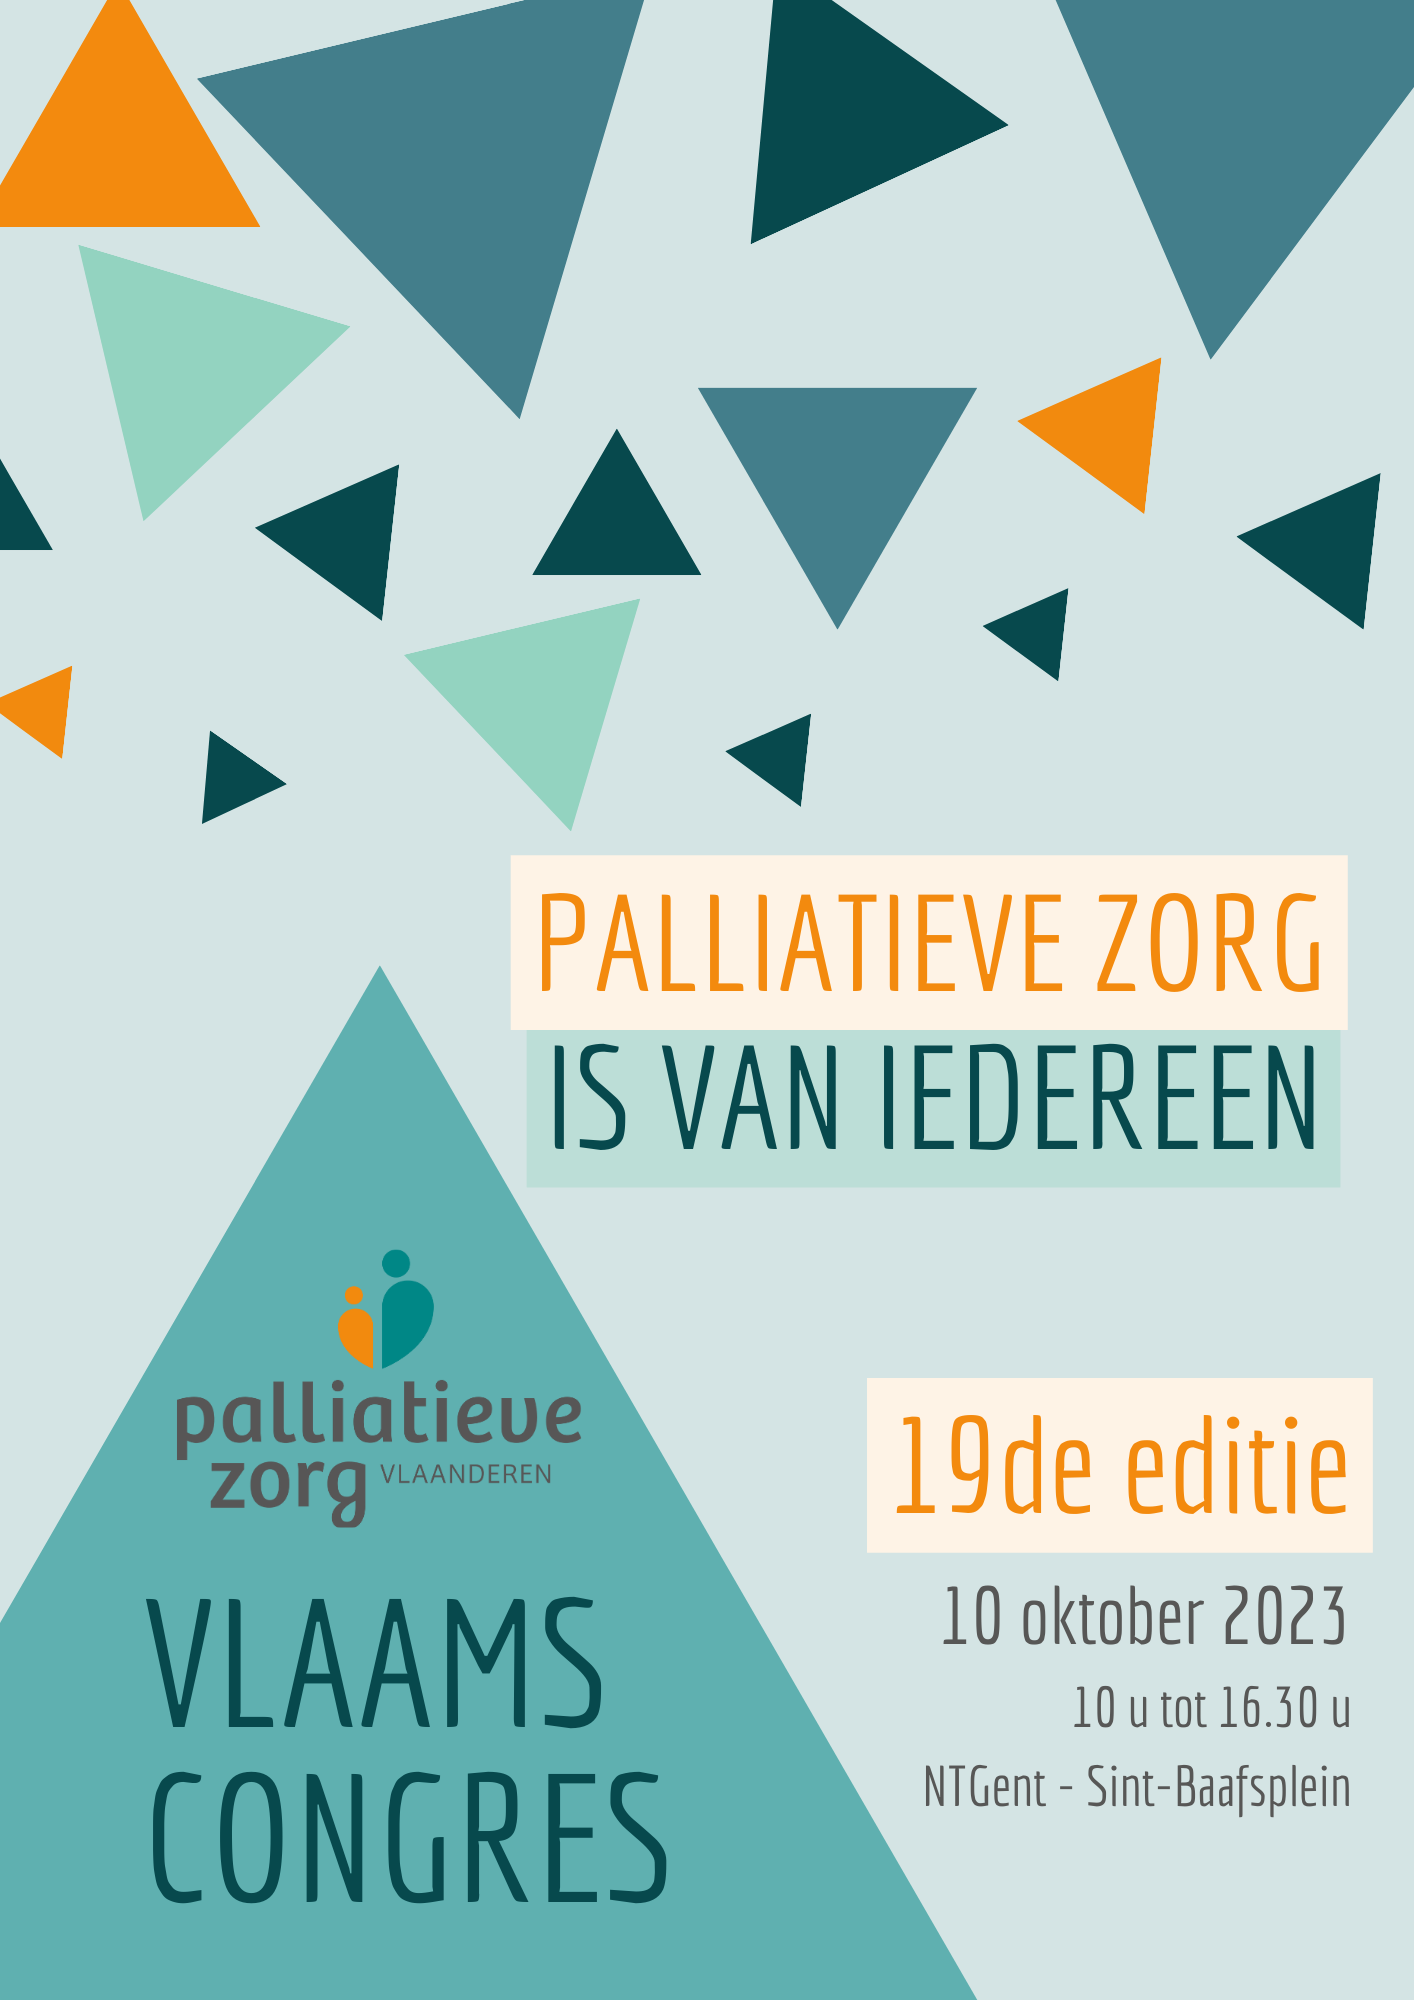 Vlaams Congres Flyer 2023